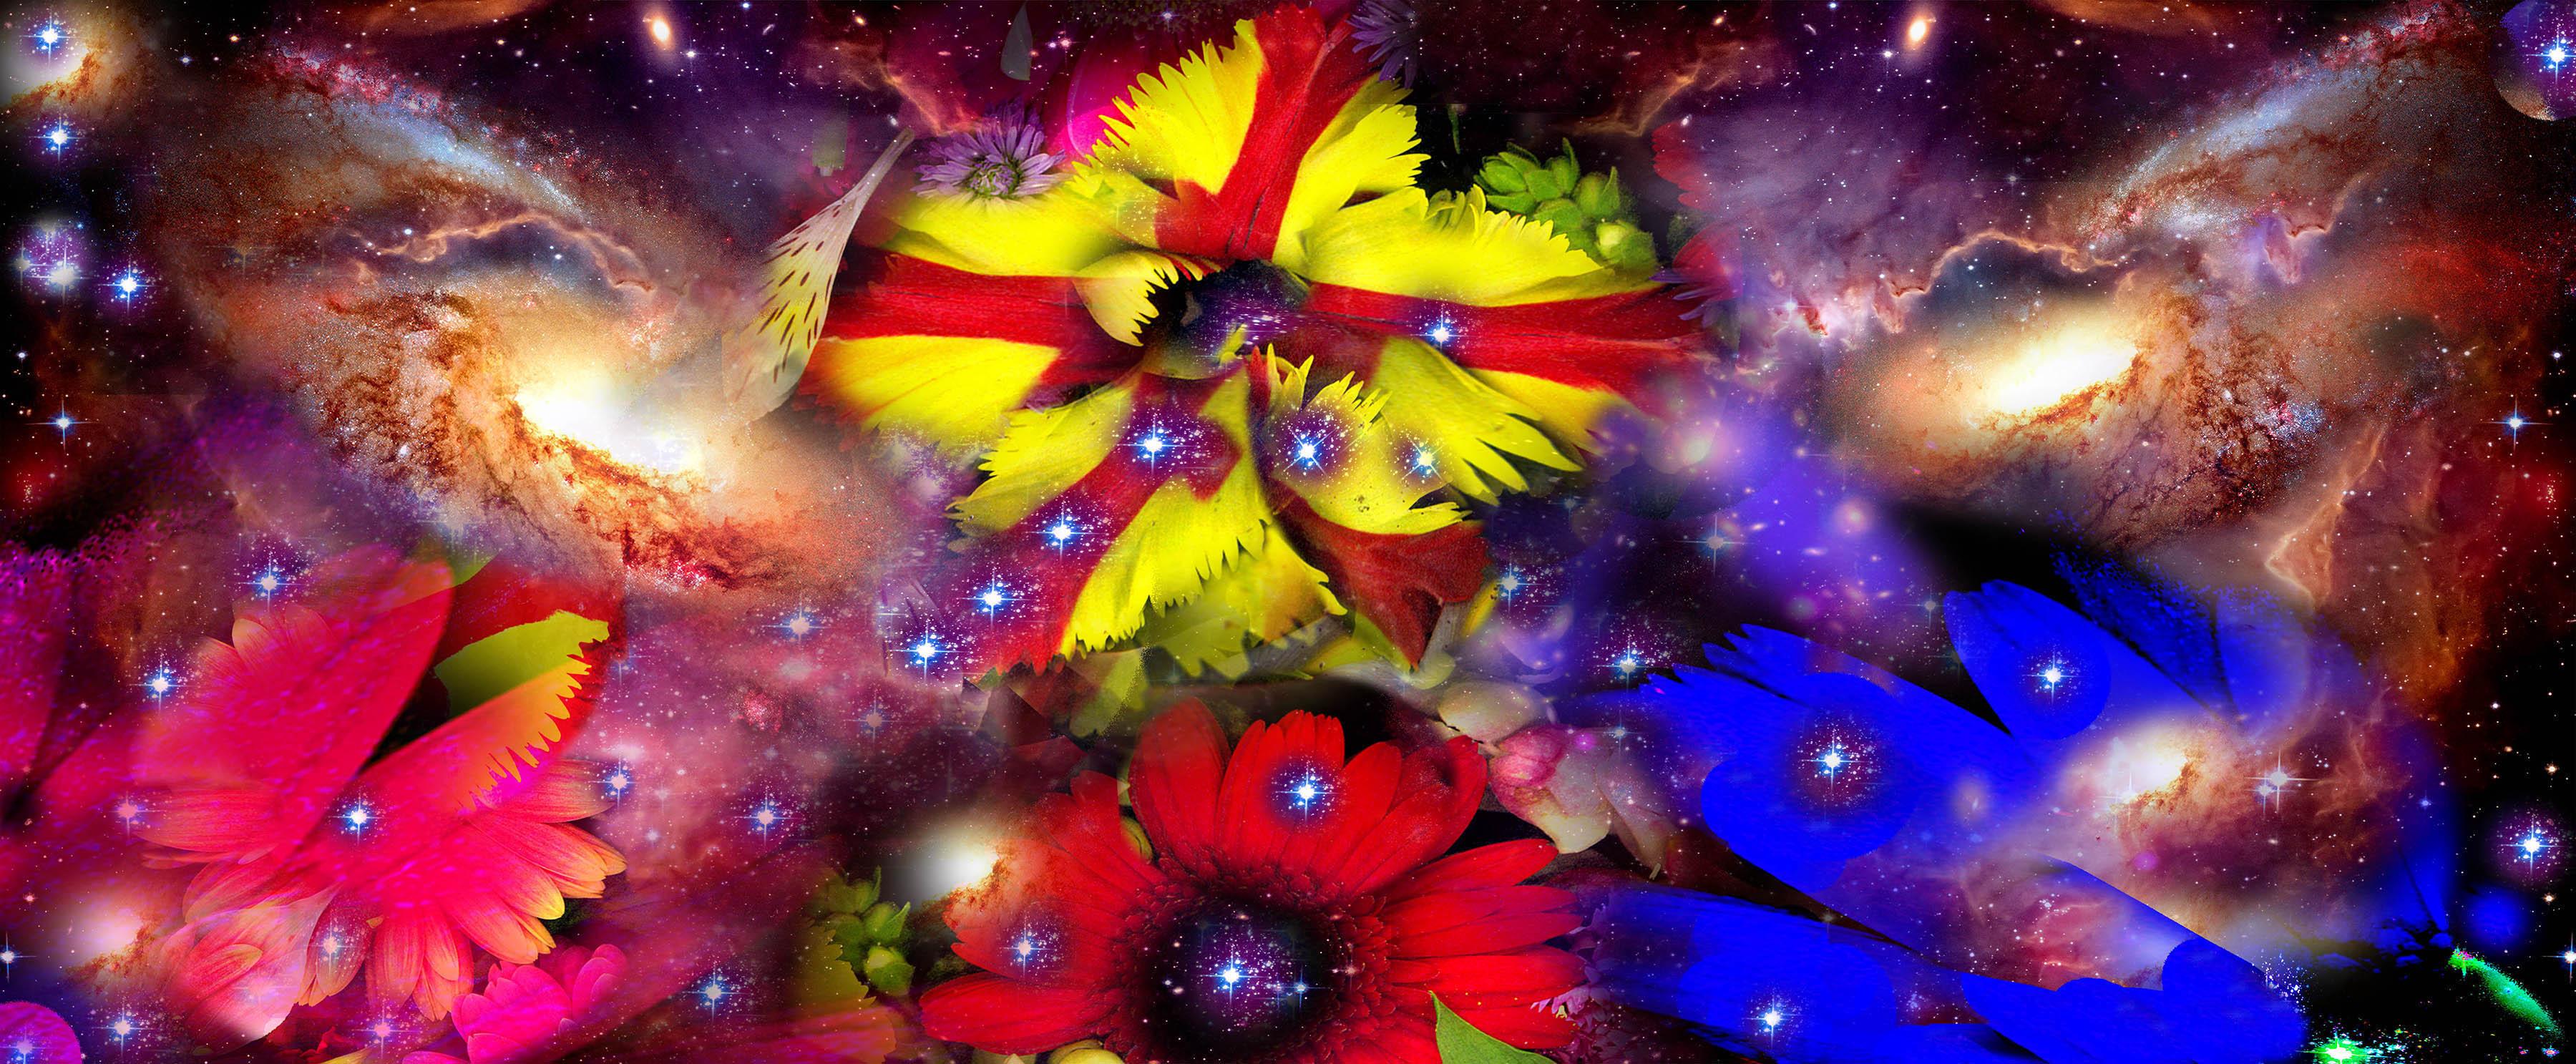 Gardens & Galaxies: Trio 24"x42" bright colors, abstract interpretation   nature - Art by Susan Kaprov